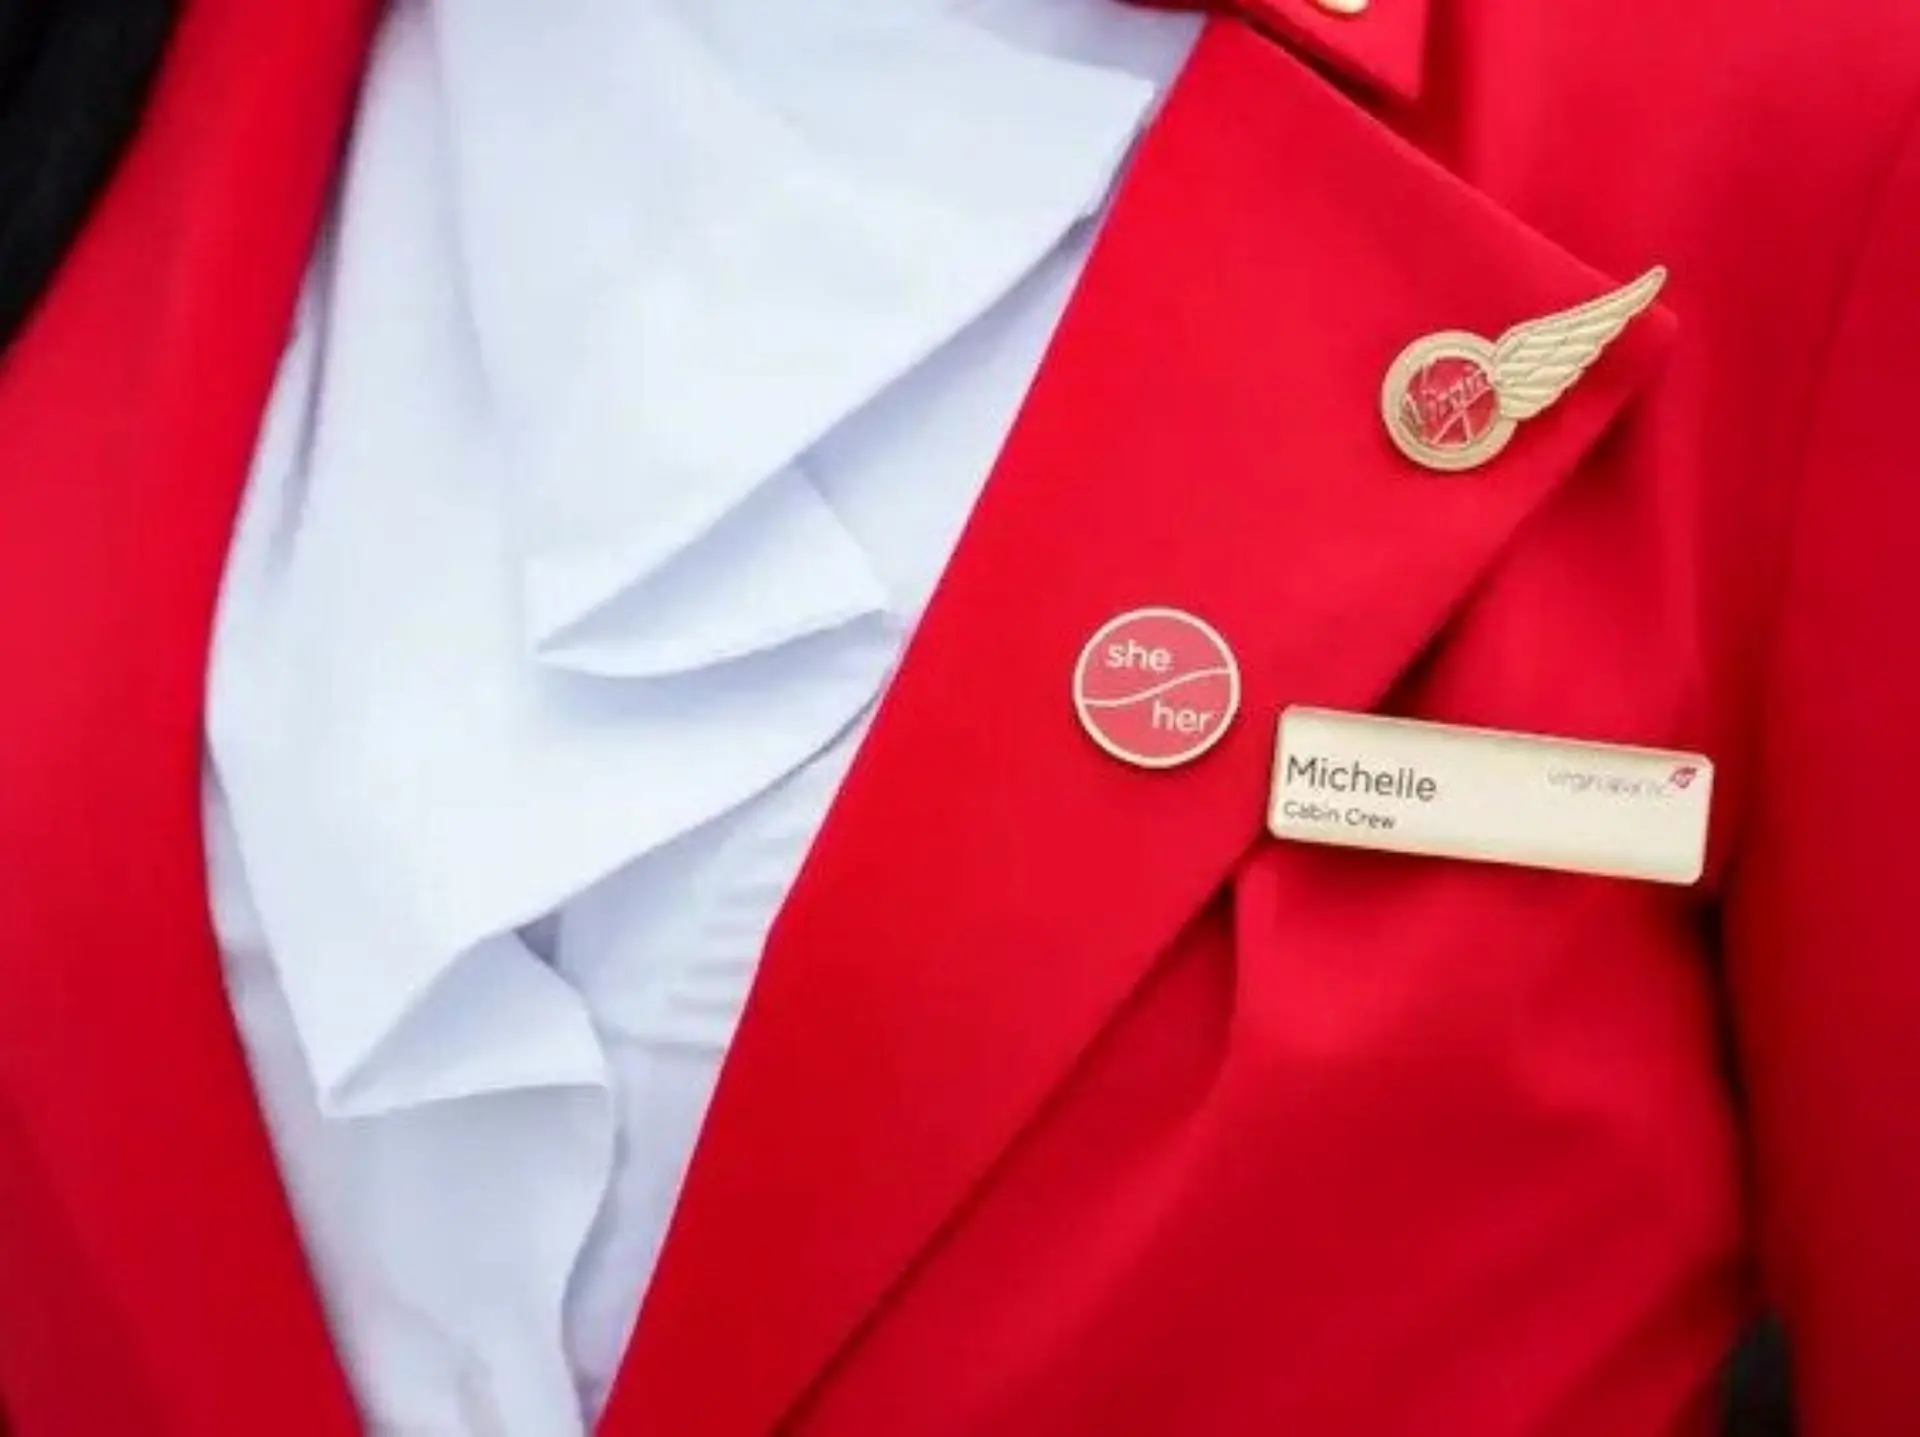 Airlines News - Virgin Atlantic introduces new gender-neutral uniforms